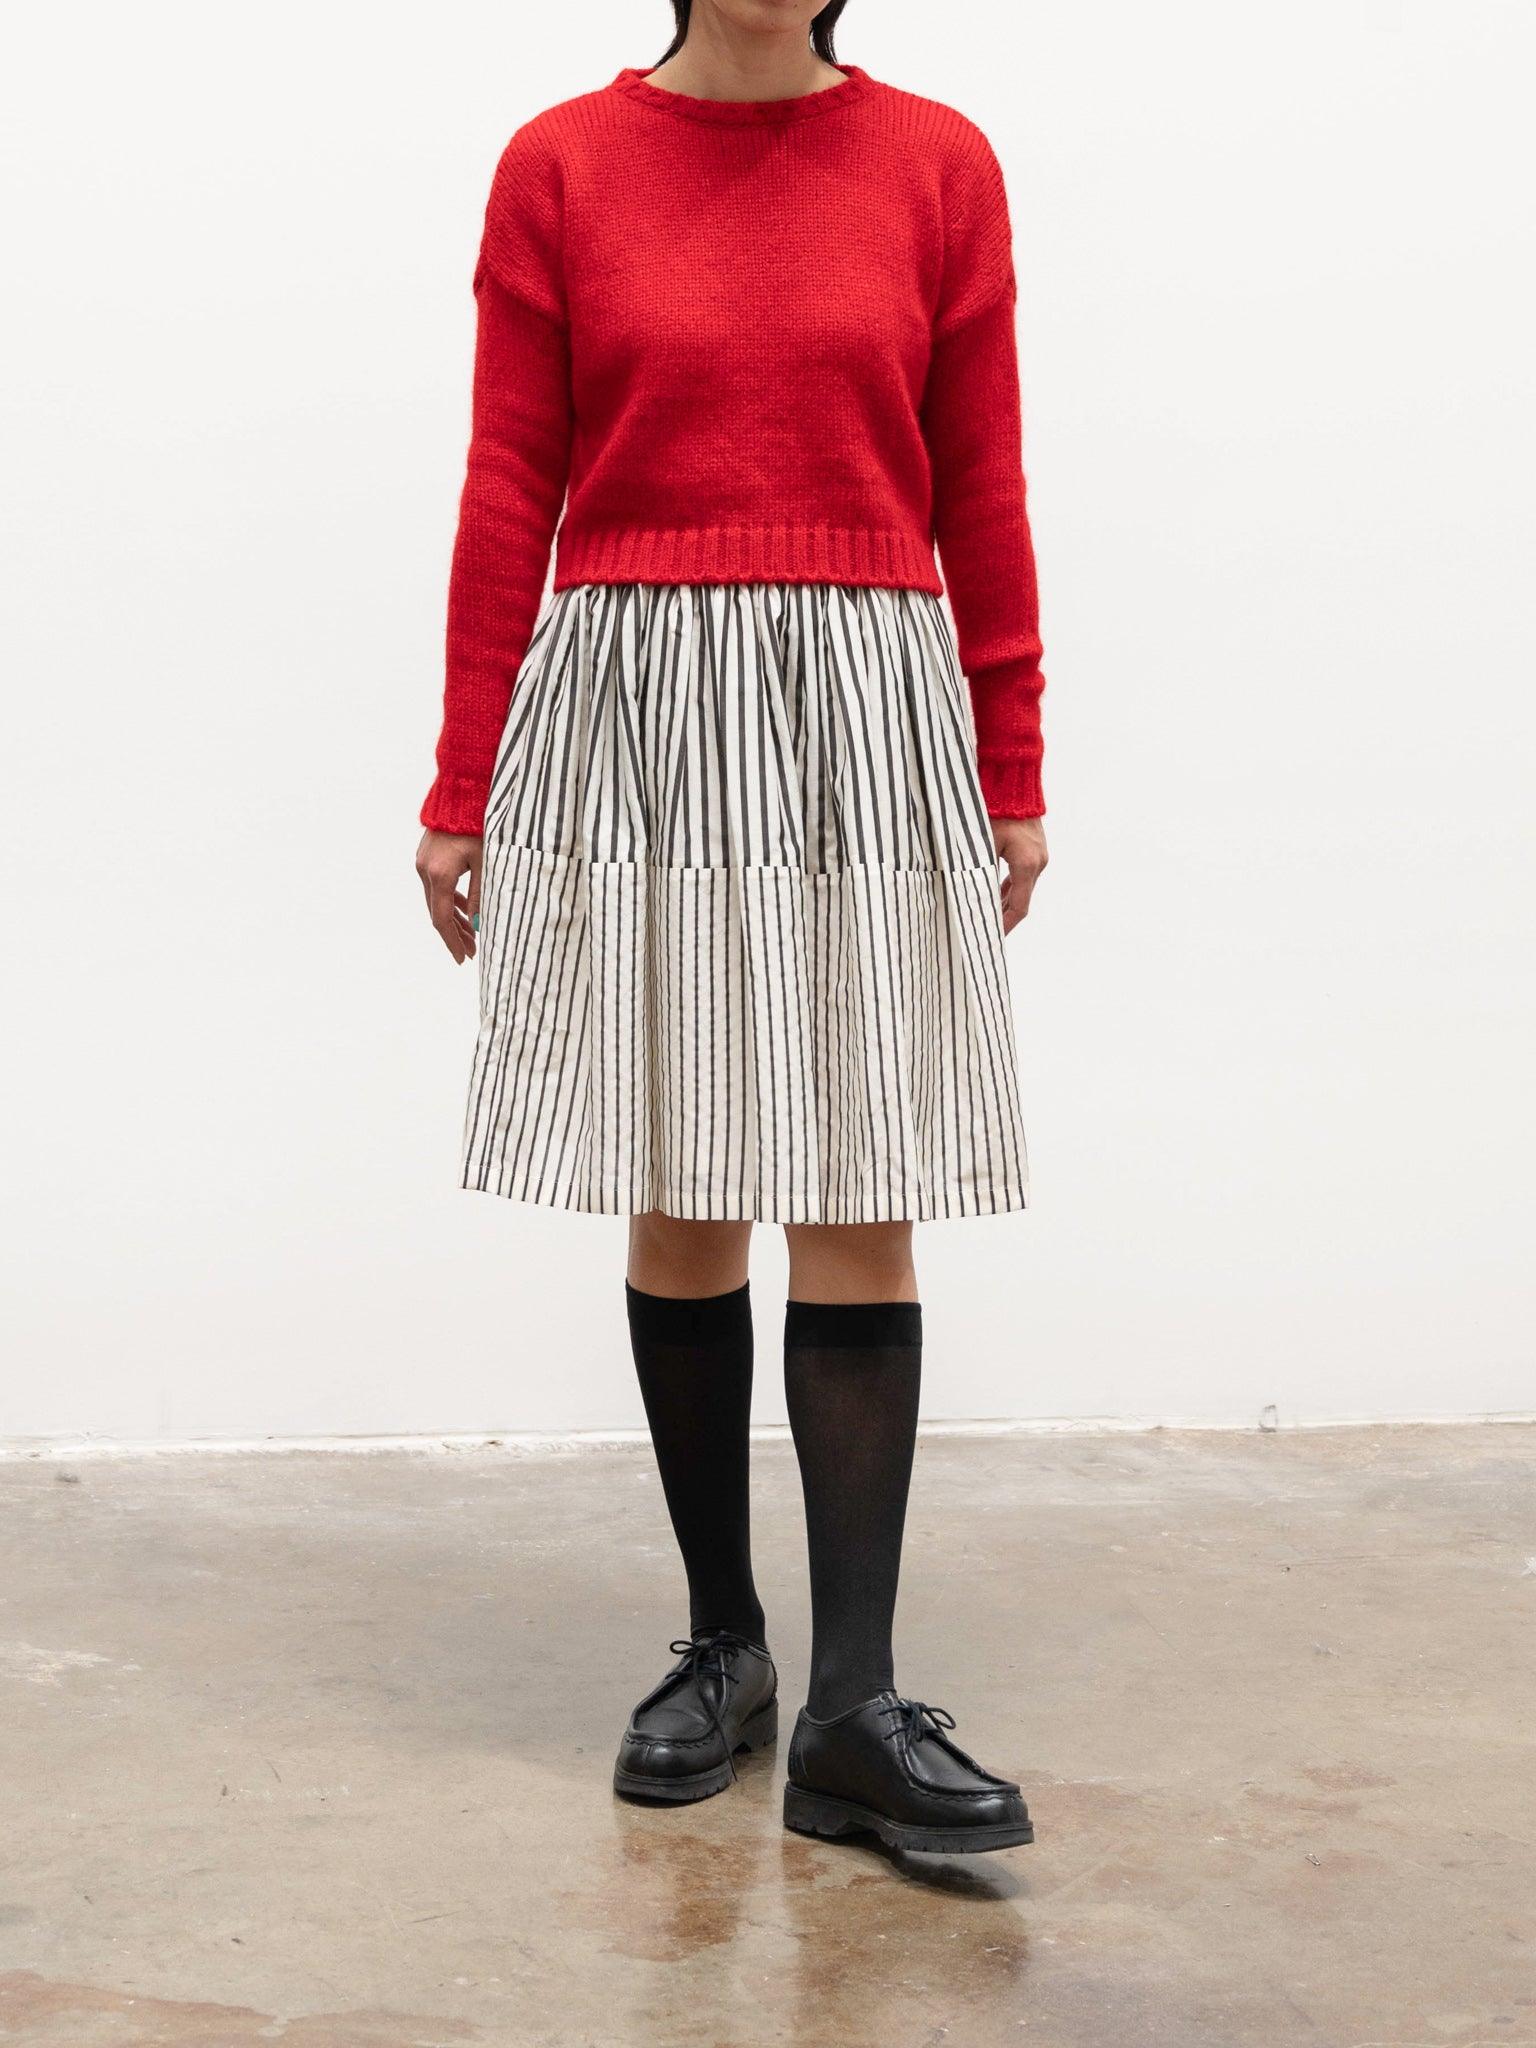 Namu Shop - Sara Lanzi Gathered Skirt - Stripes